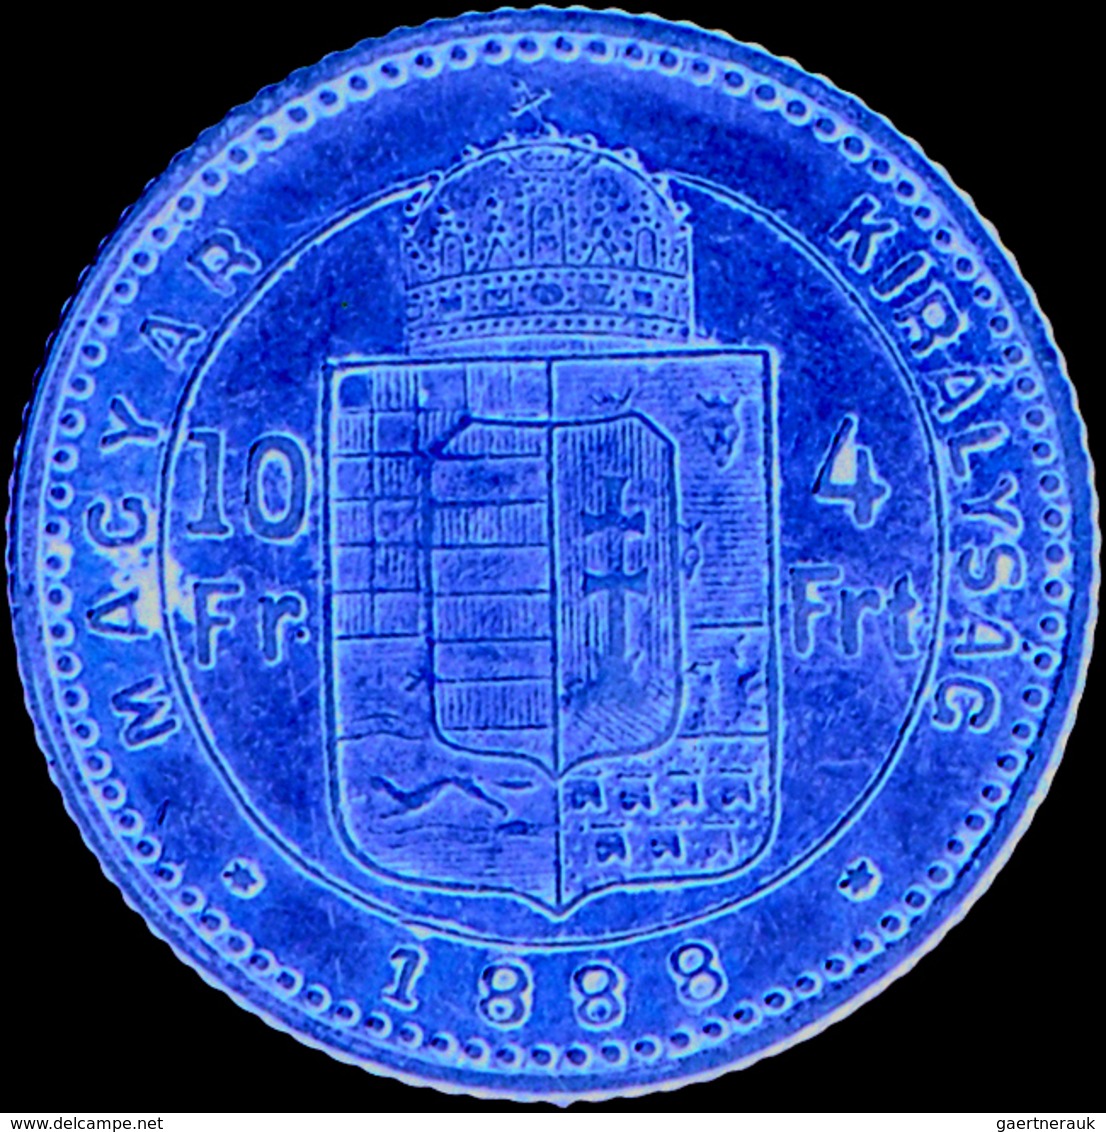 Ungarn - Anlagegold: Franz Josef I. 1848-1916: Lot 2 Goldmünzen: 4 Forint - 10 Francs 1888, KM # 466 - Hungary